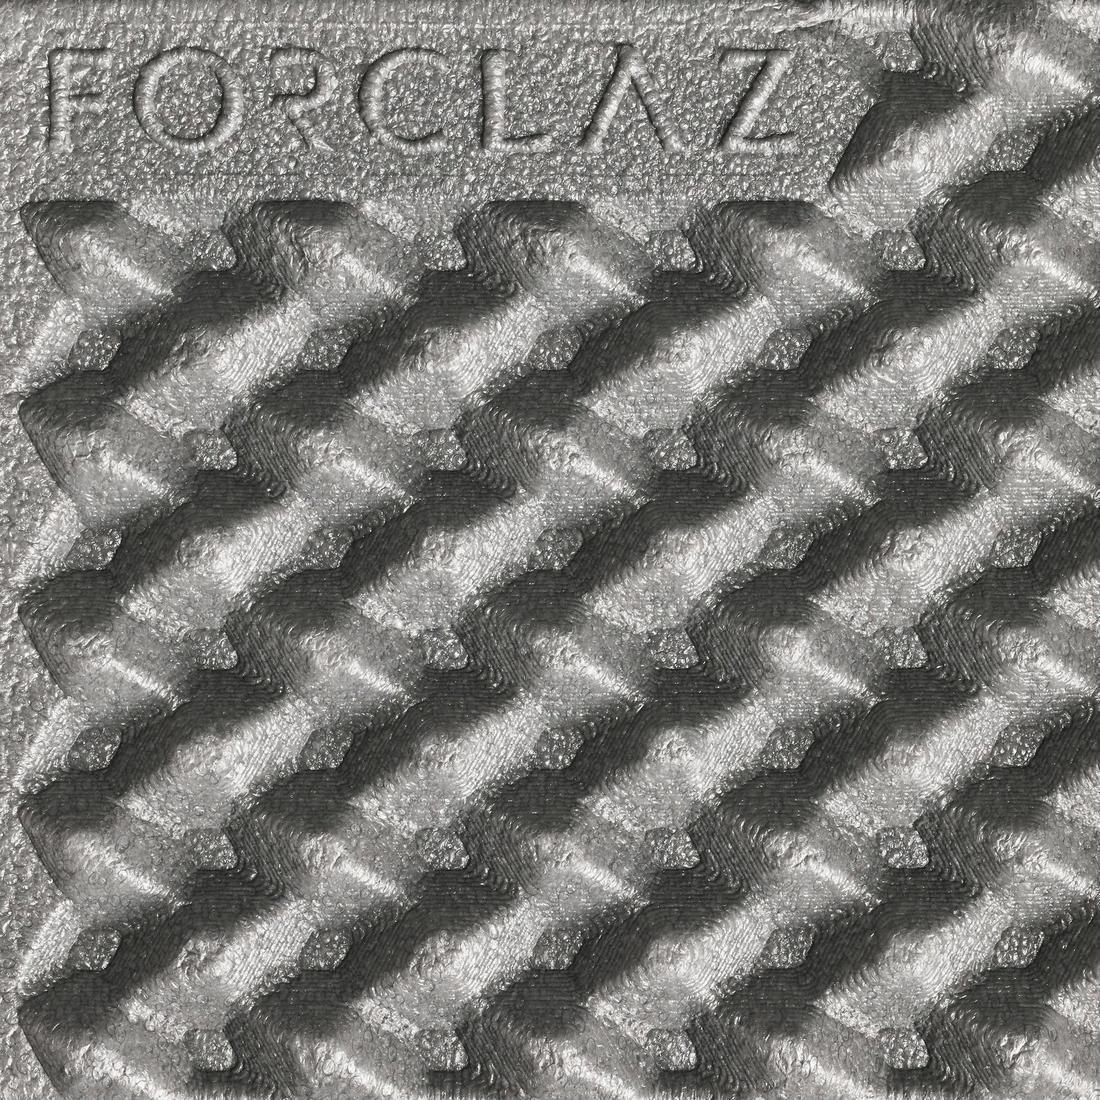 FORCLAZ - Foam Folding Mattress, Grey